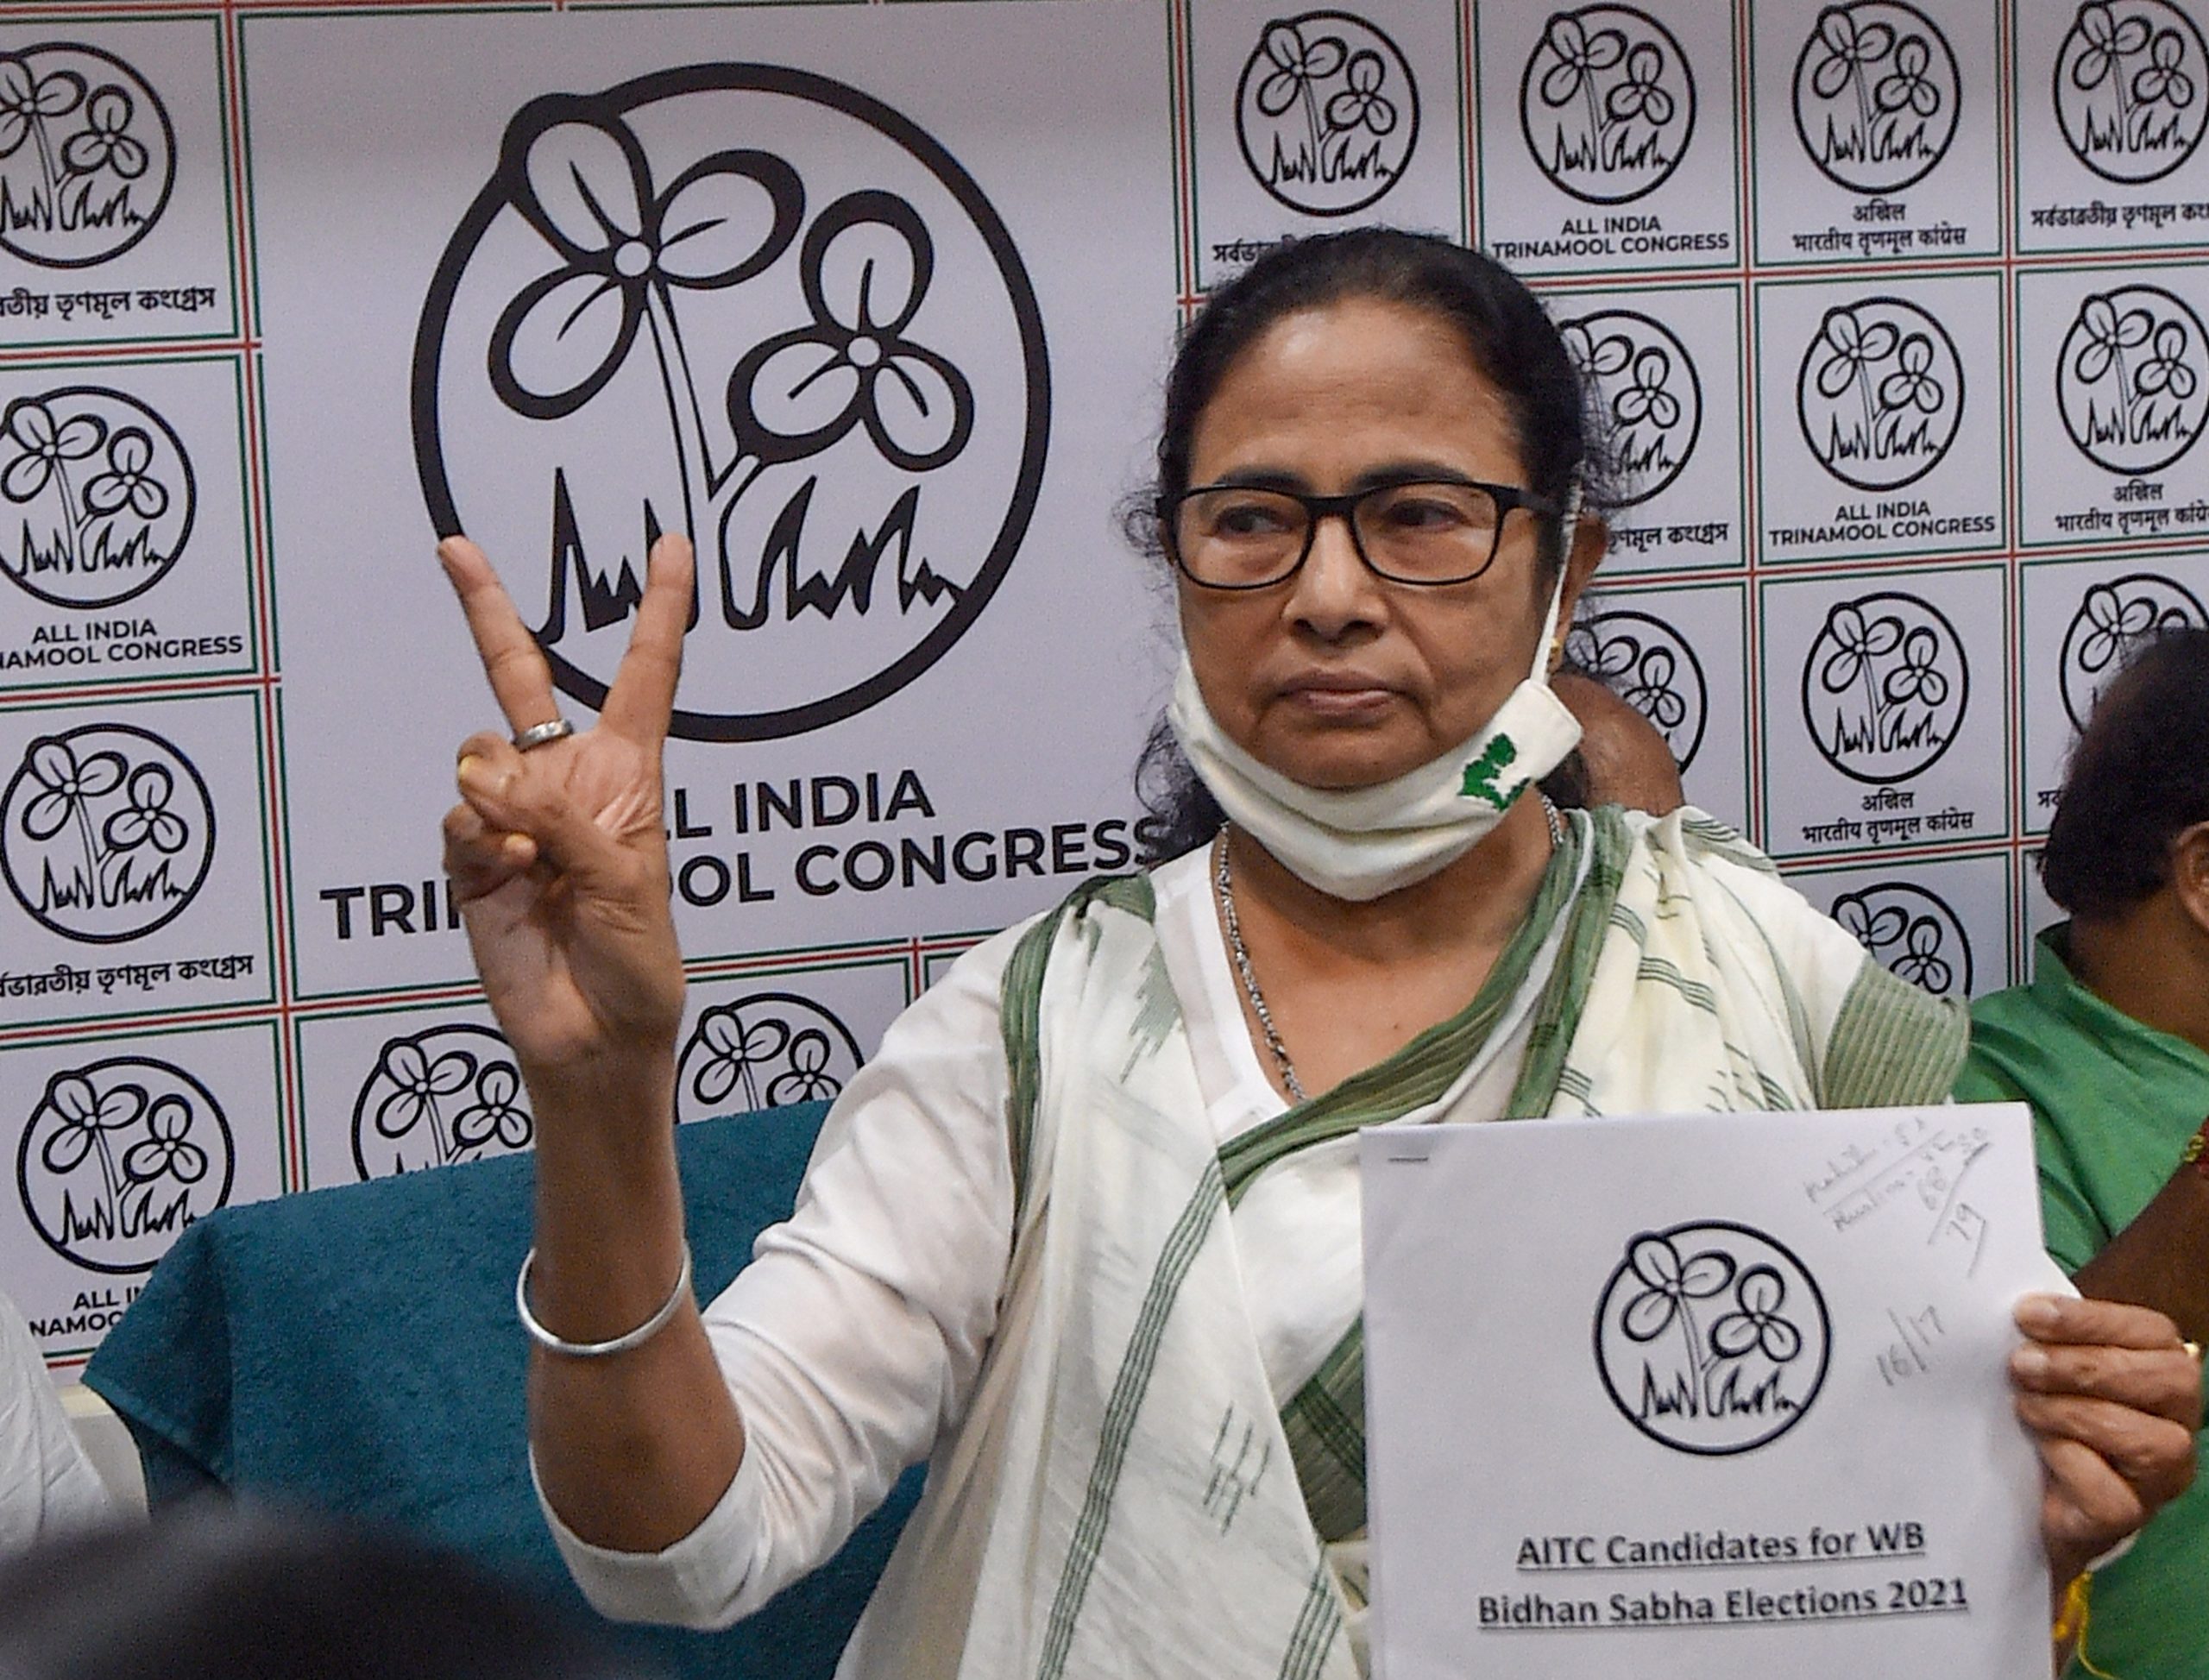 Mamata Banerjee replies to PM Modis Brigade challenge, says ready to play